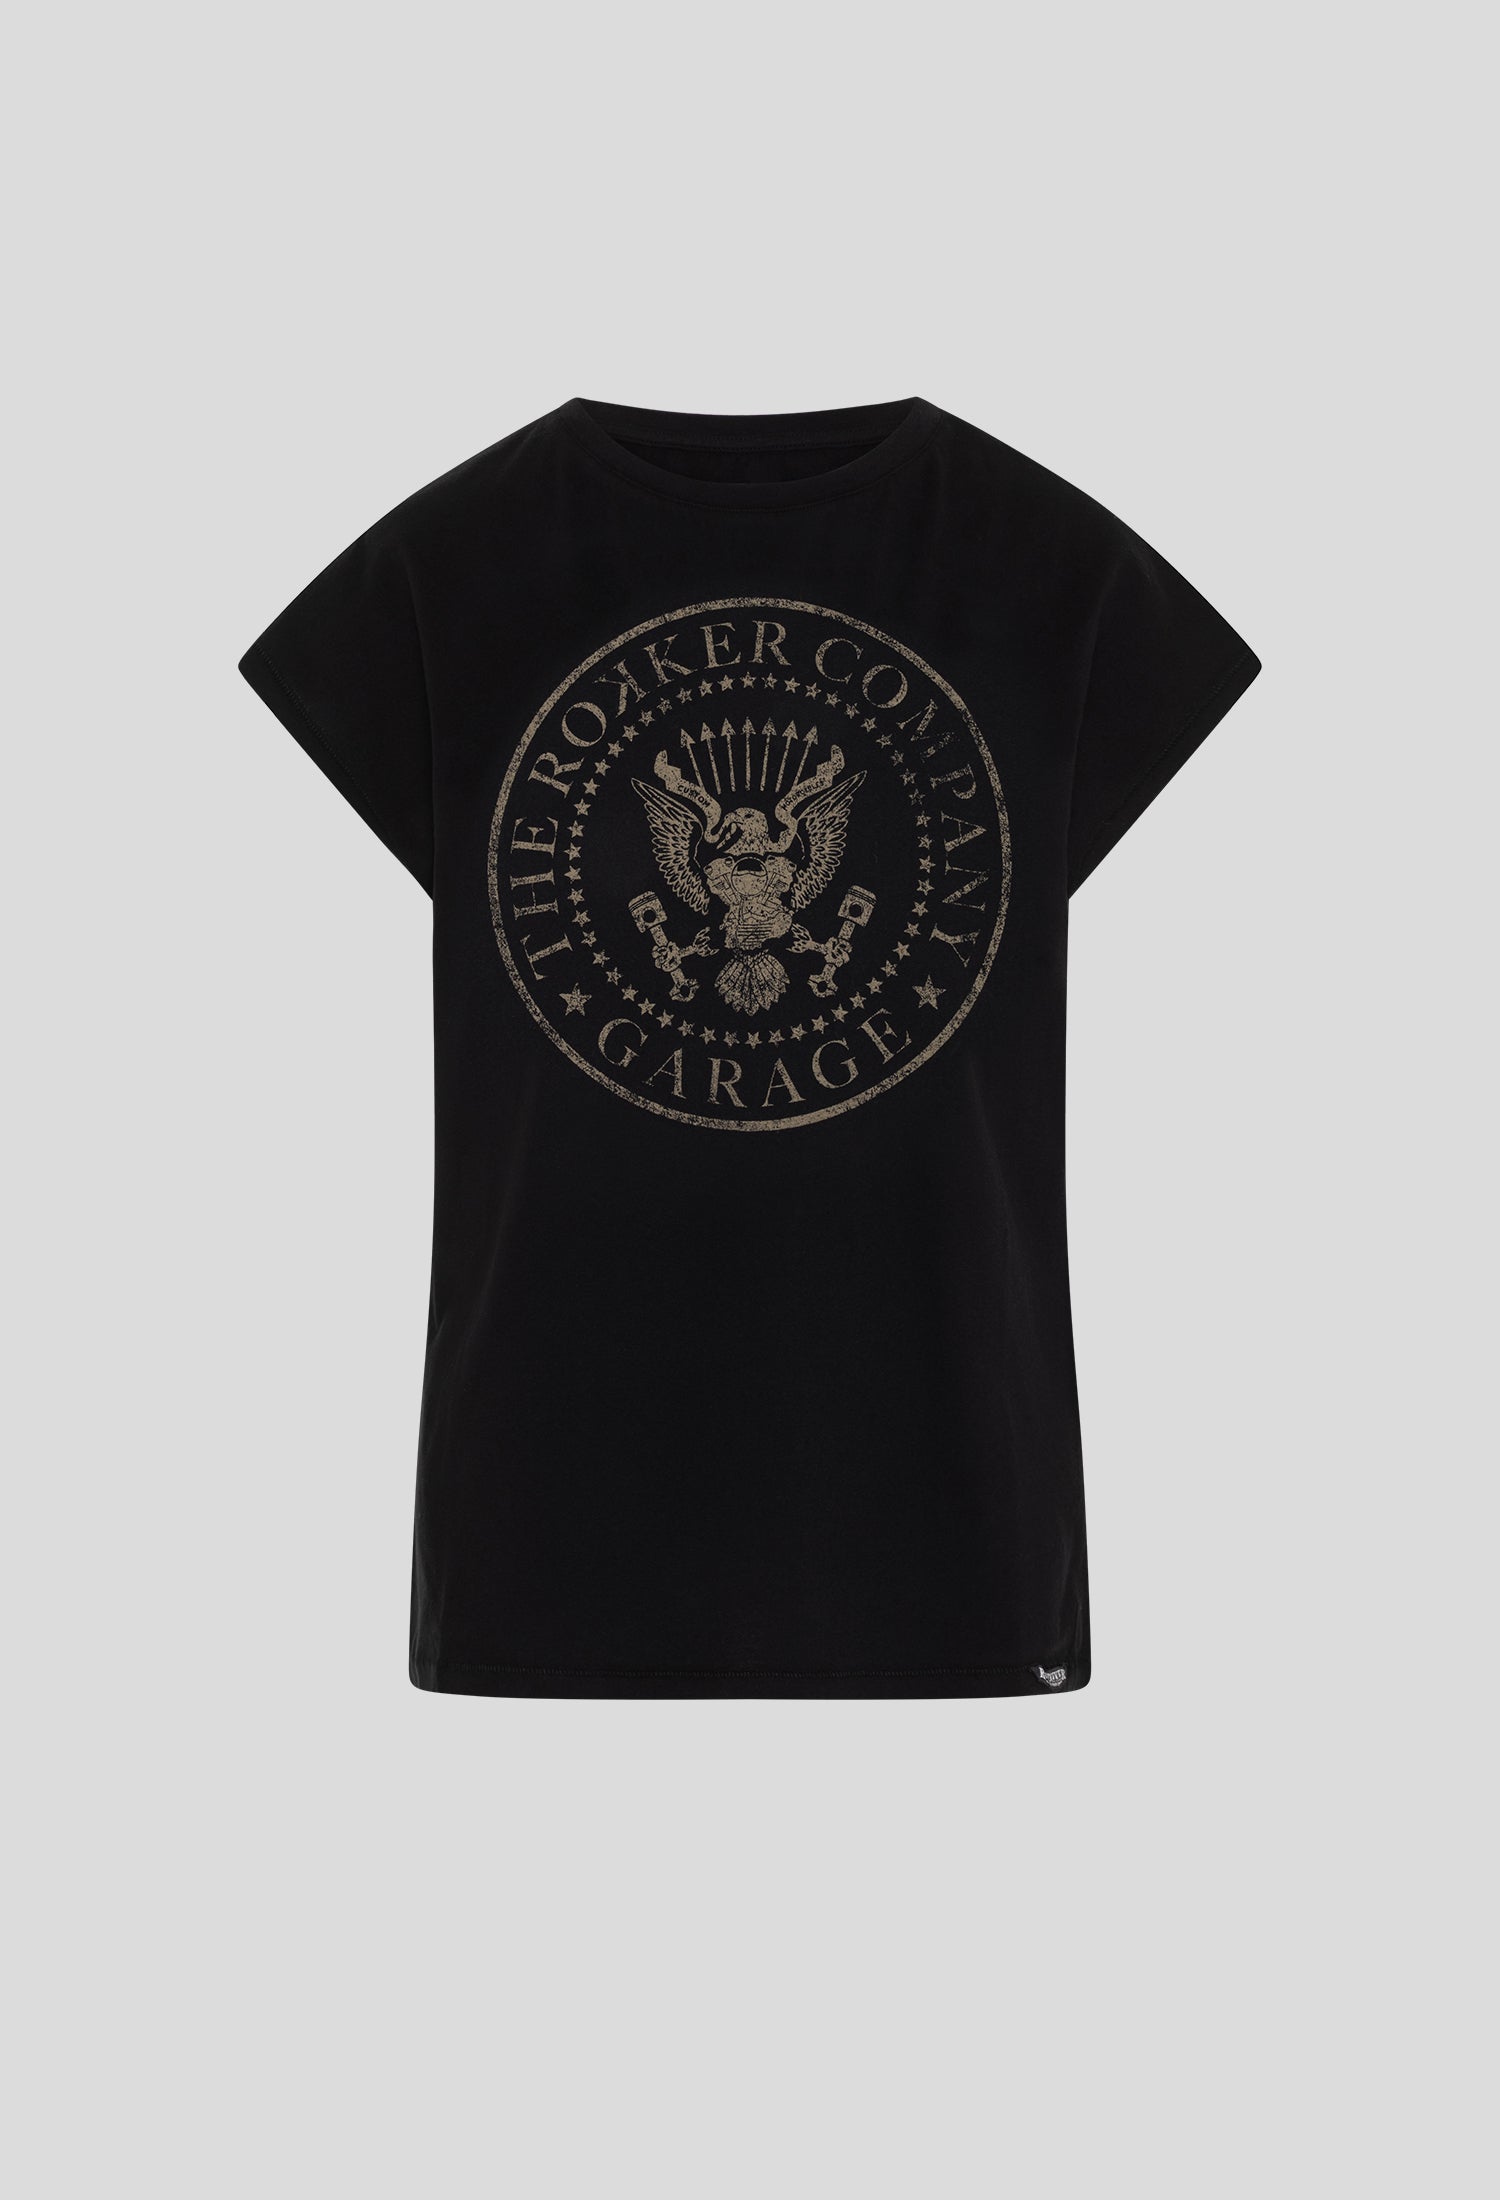 Johnny Lady T-Shirt Black